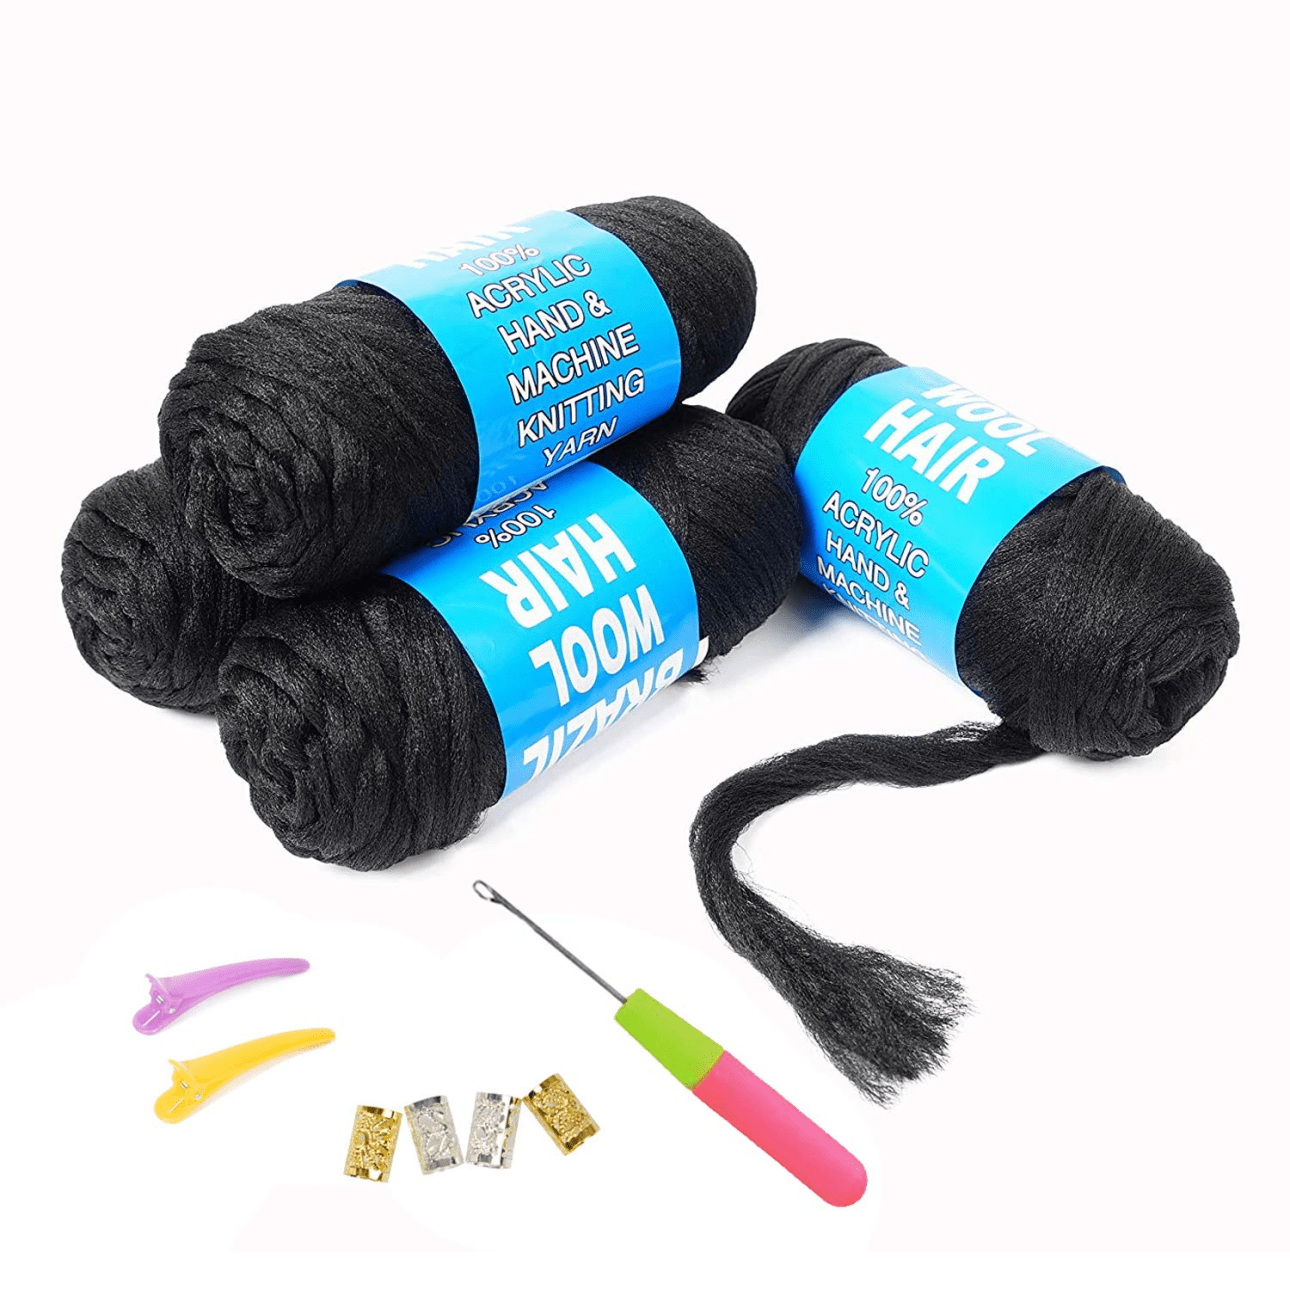 Black wool for hair